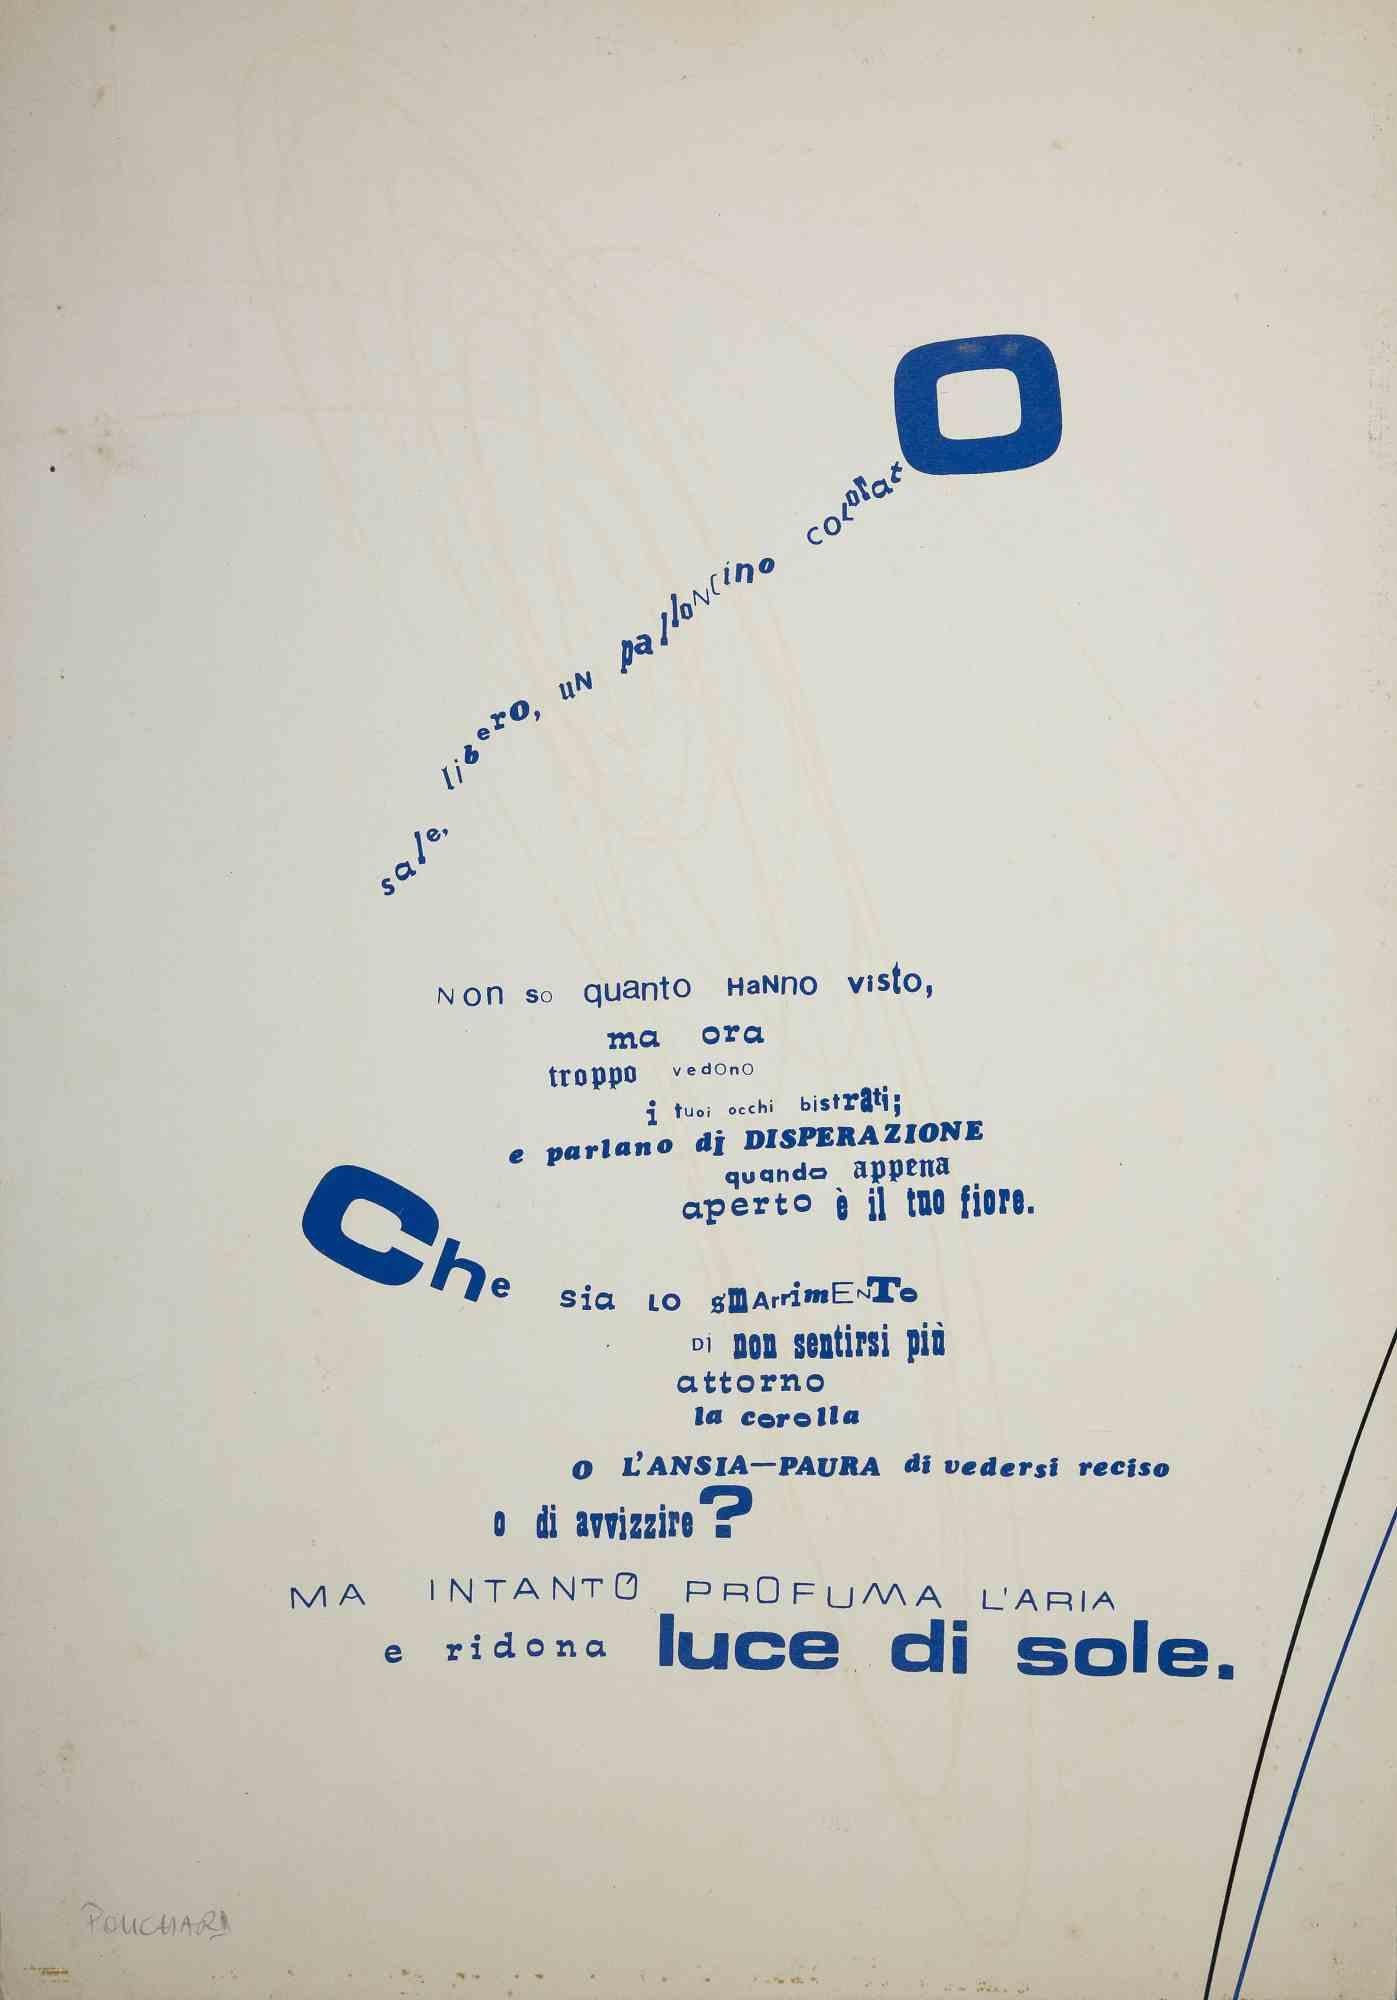 Visual Poem - Screen Print by Ennio Pouchard - 1970